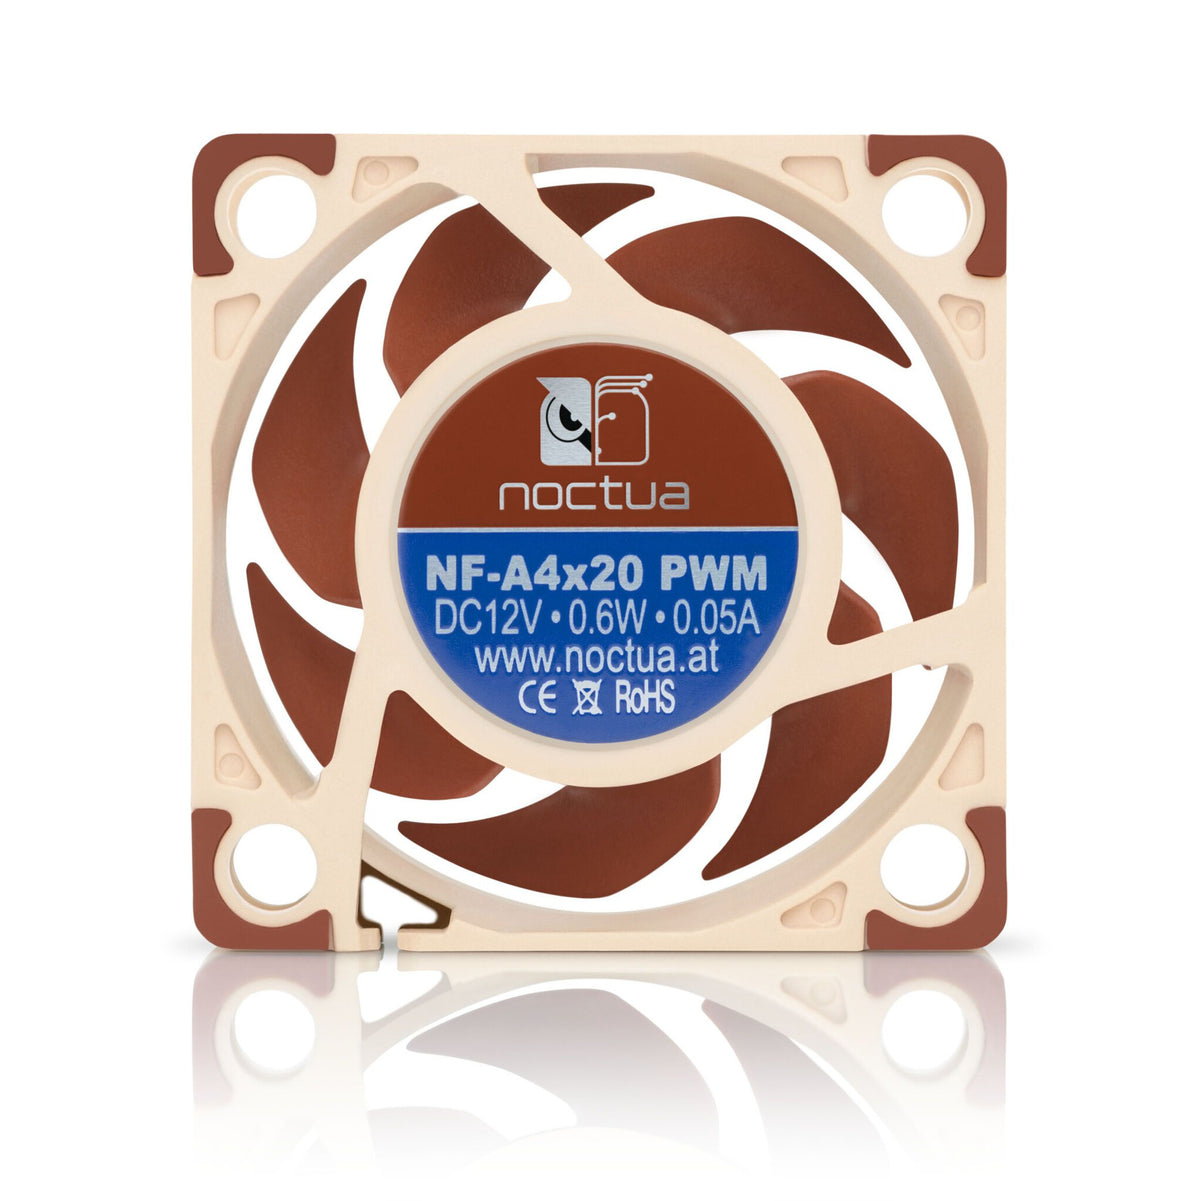 Noctua NF-A4x20 PWM - Computer Case Fan in Beige / Brown - 40mm